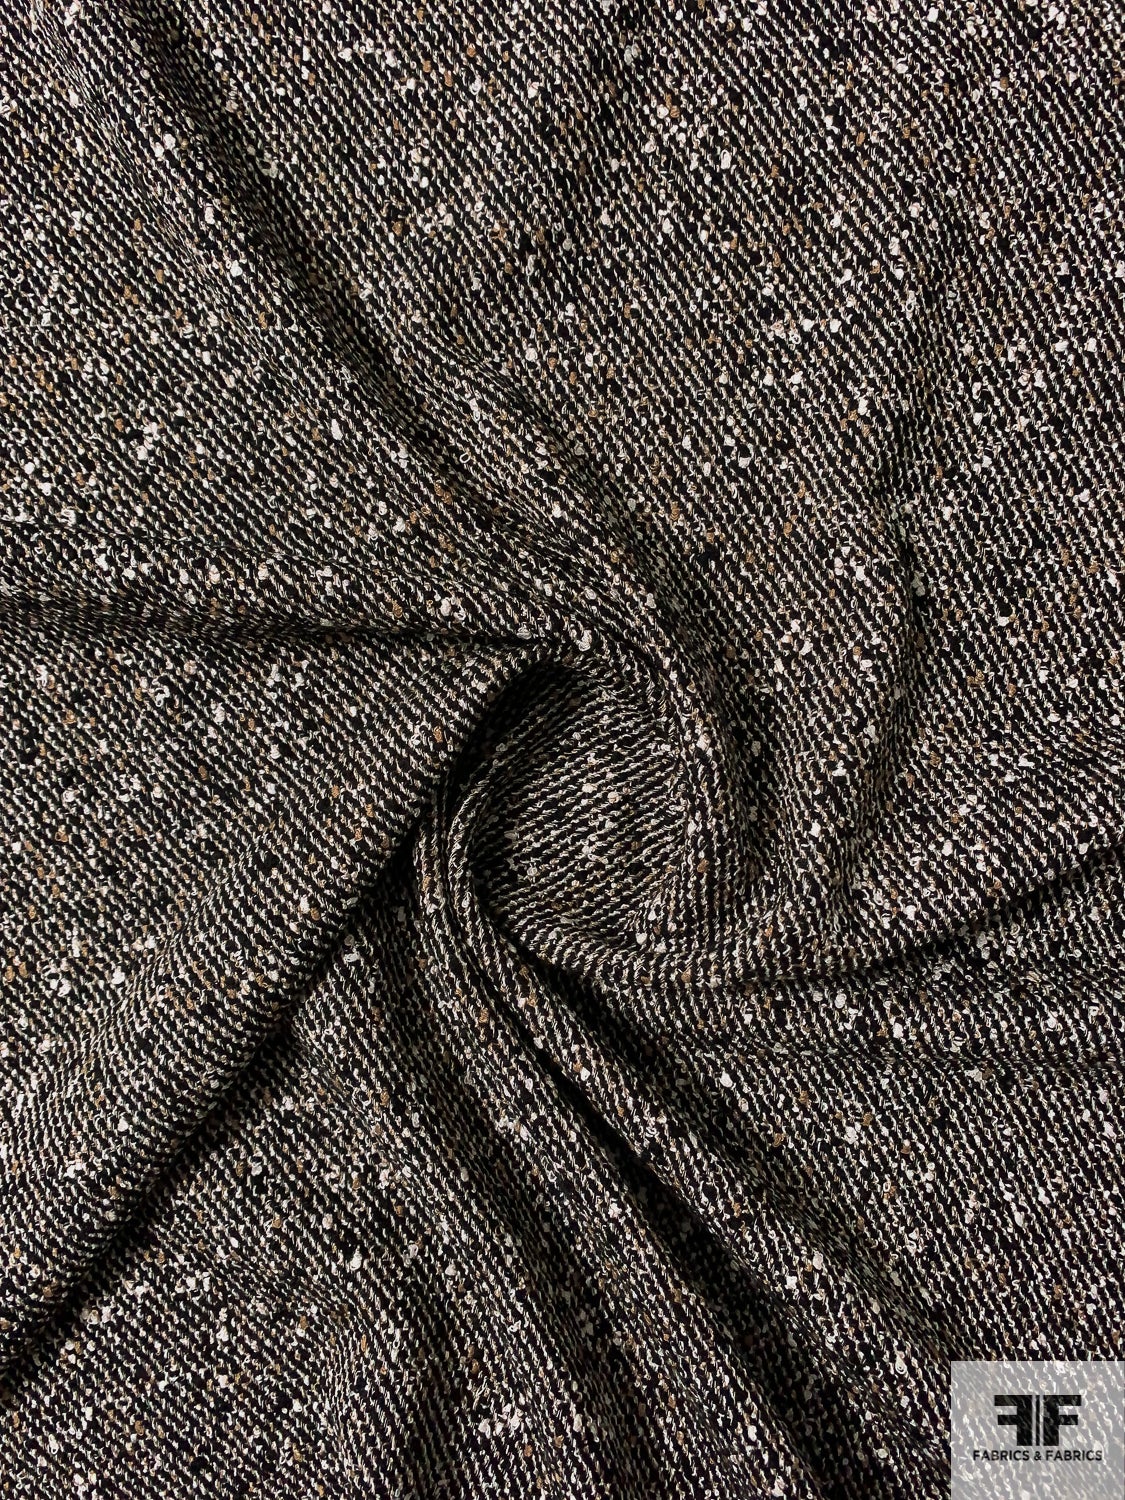 Italian Diagonal Weave Speckled Nub Ladies Suiting - Black / Off-White / Tan